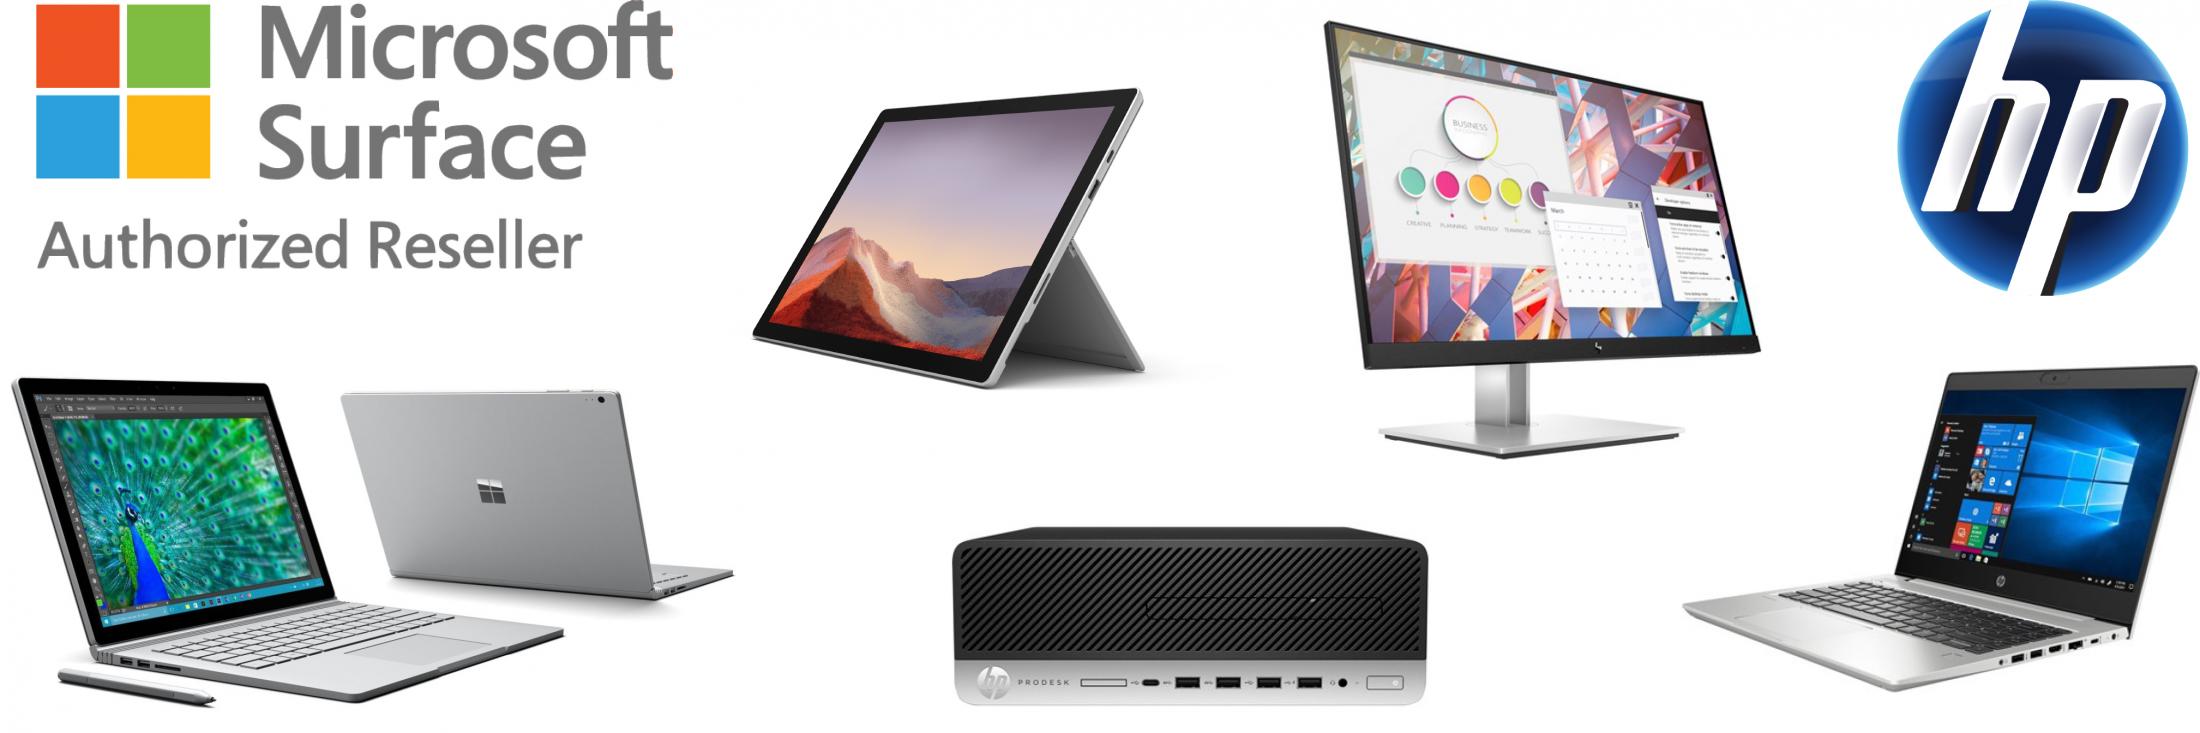 PC, Surface, HP, Tablet, Laptop, Laptops, Desktop, Desktops, PCs, Macbook, Mac